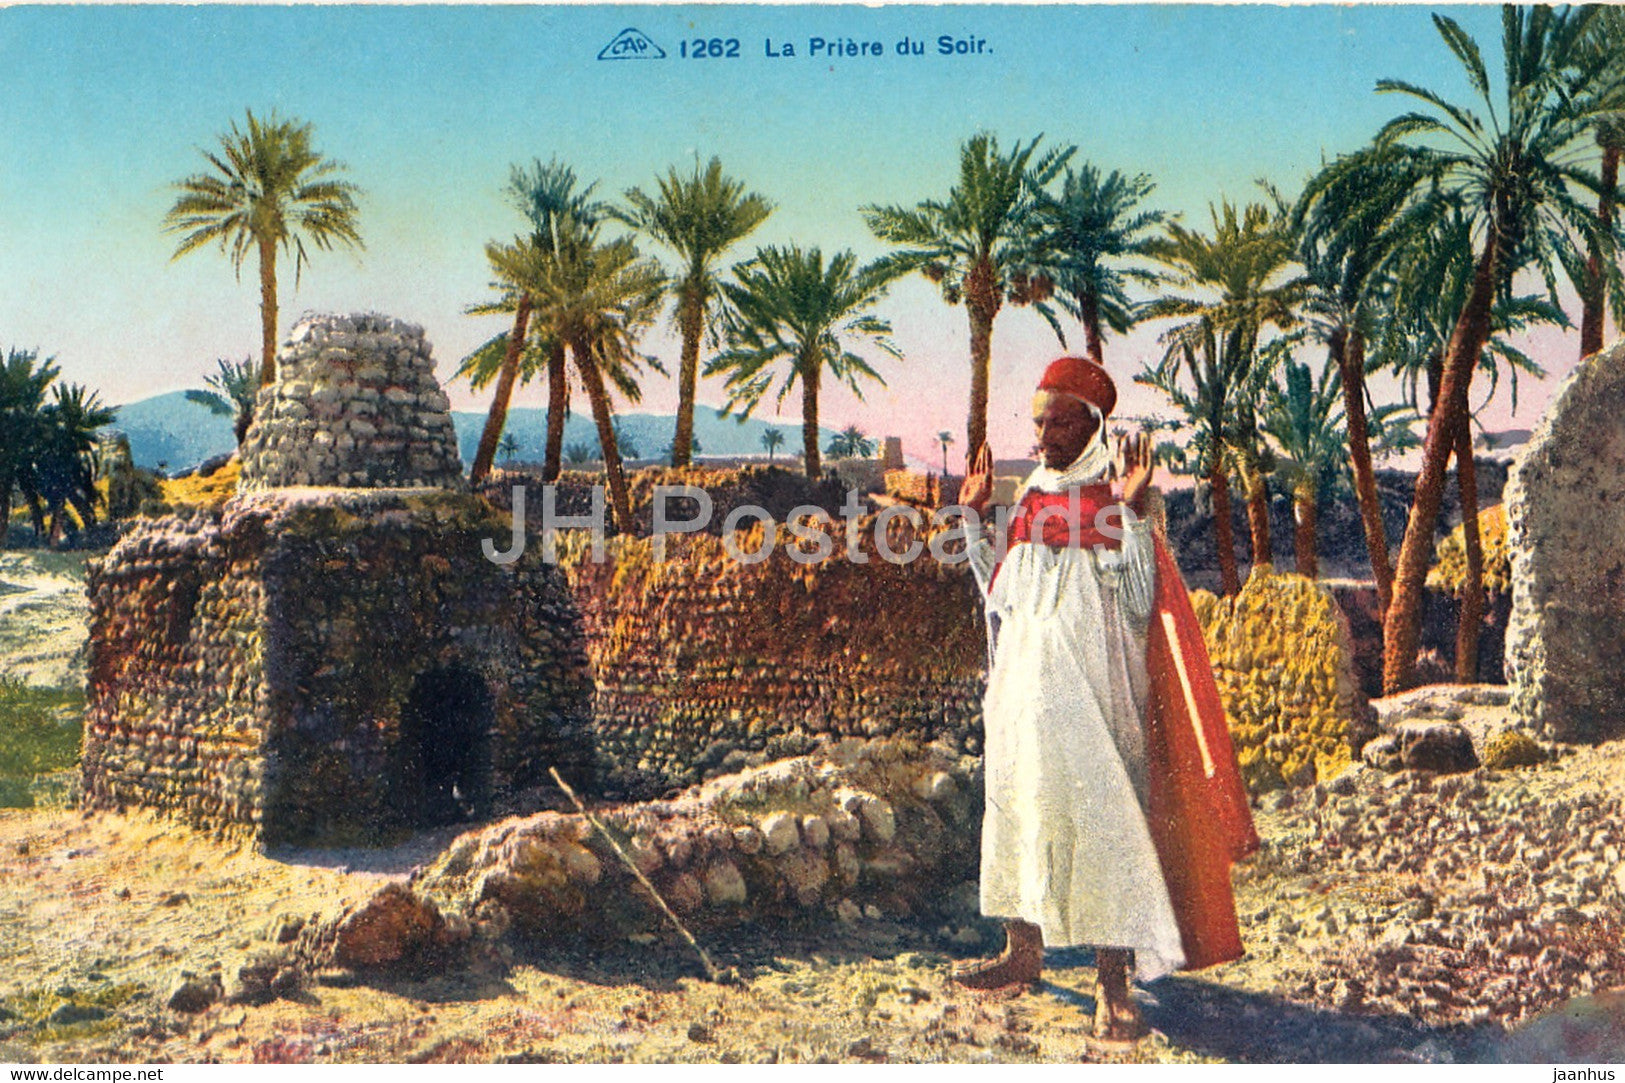 La Priere du Soir - 1262 - old postcard - 1946 - Algeria - used - JH Postcards